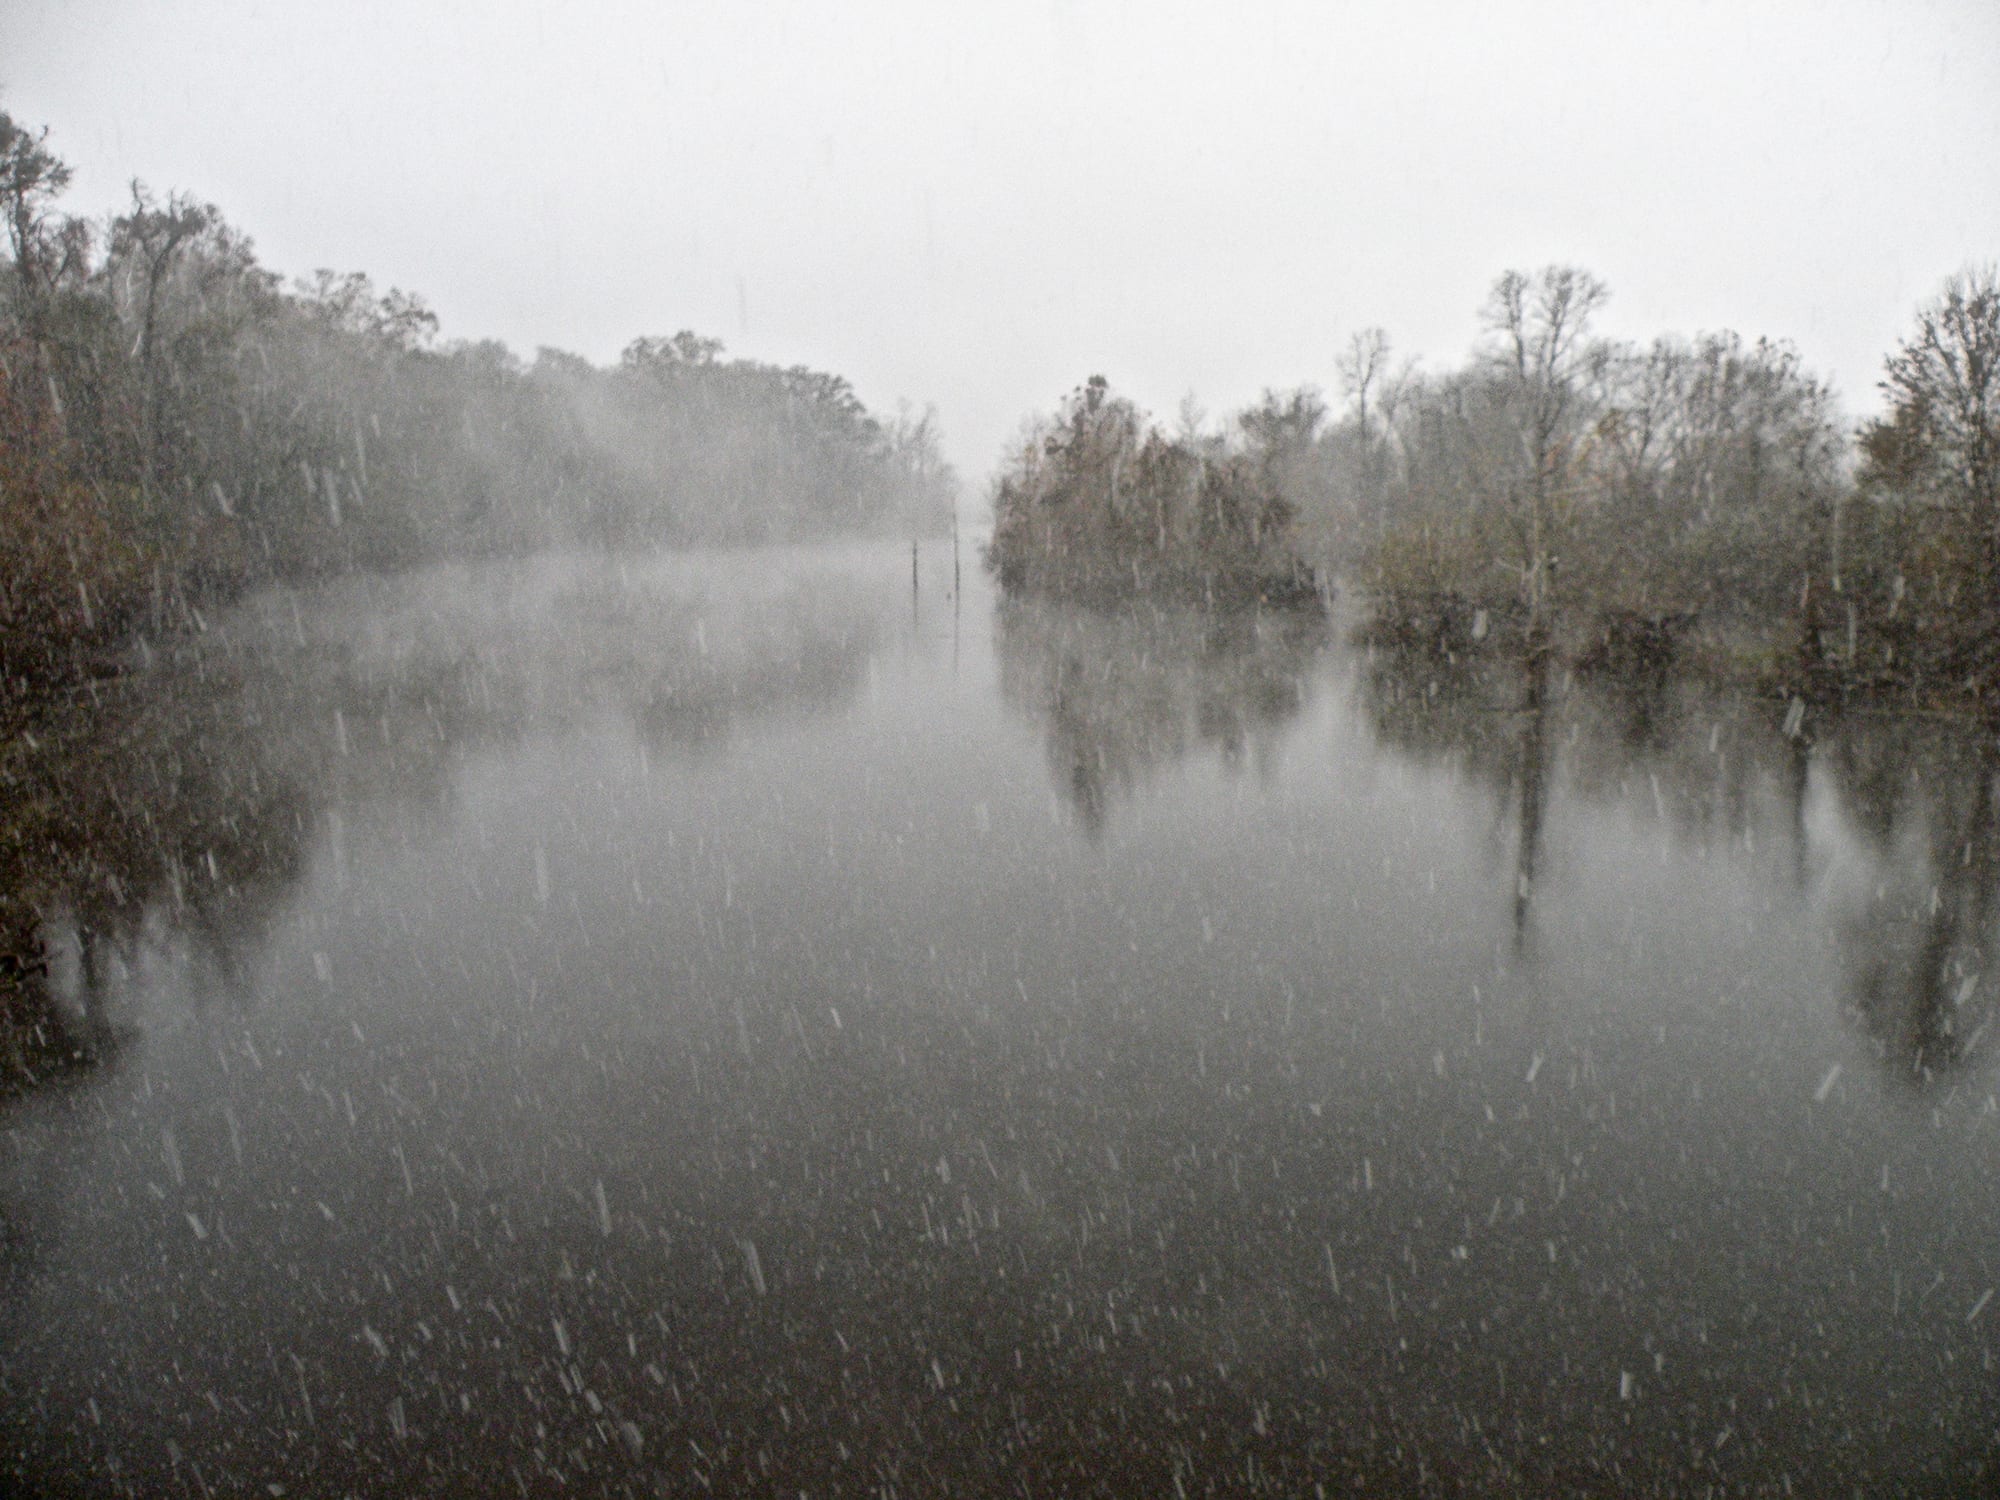 A snowstorm in Louisiana!